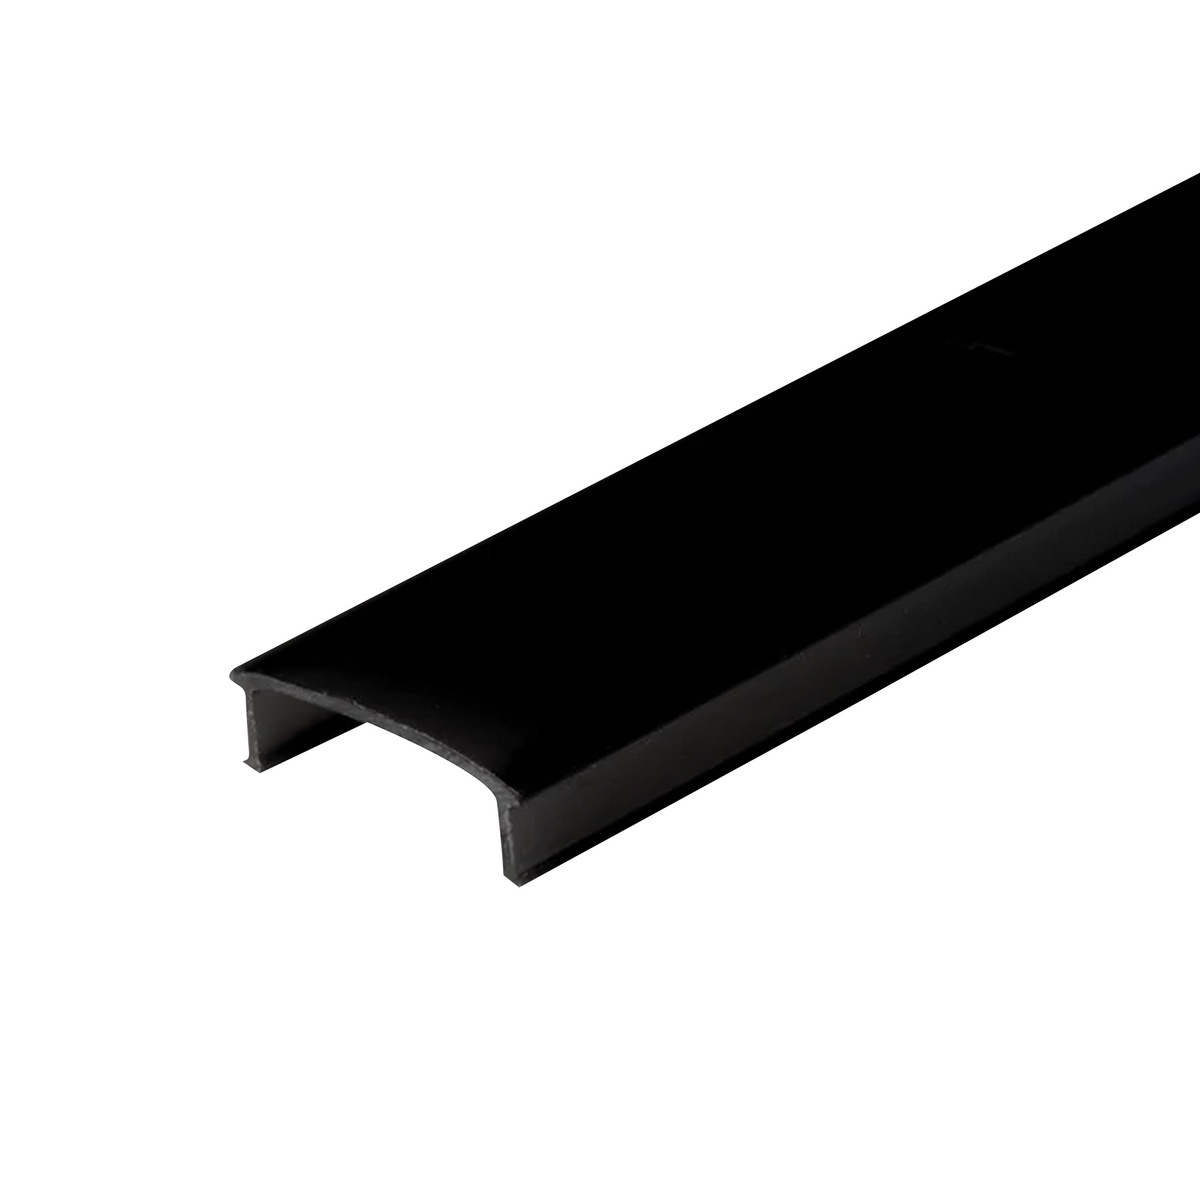 Recambio difusor 2M negro para perfil aluminio ref. 204025040 - 41 - 42